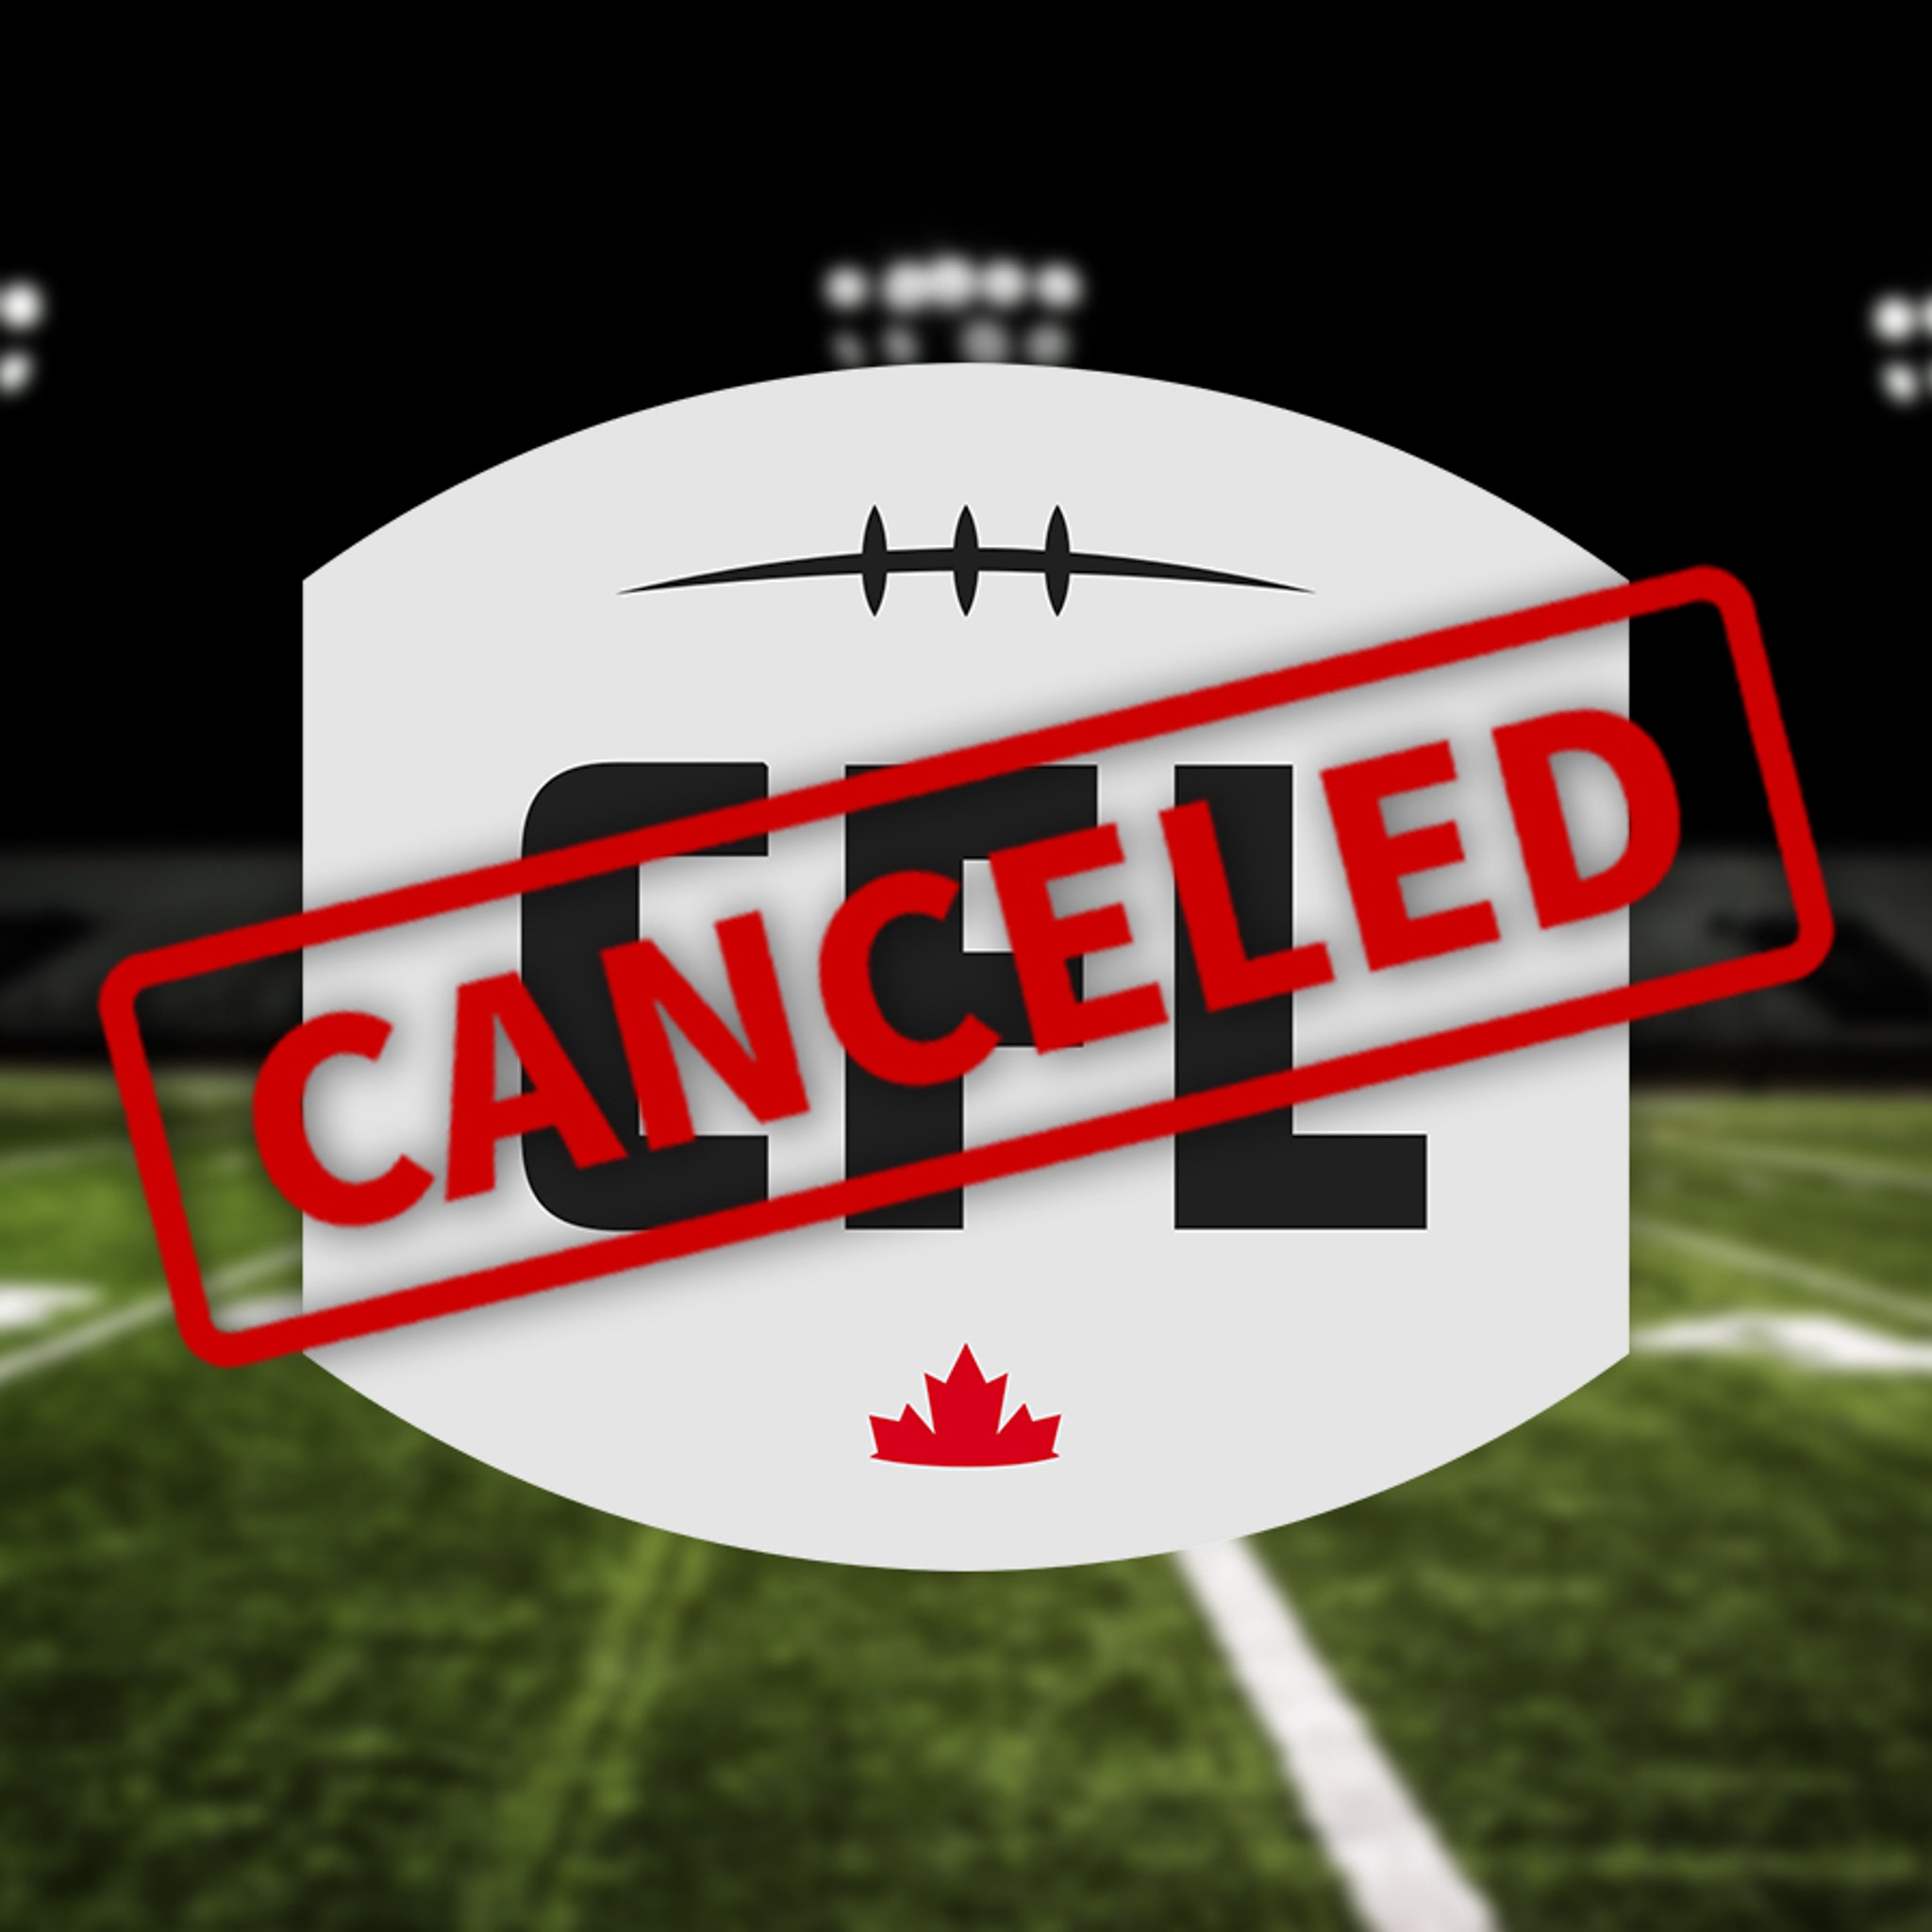 Canadian Football League to cancel 2020 season?